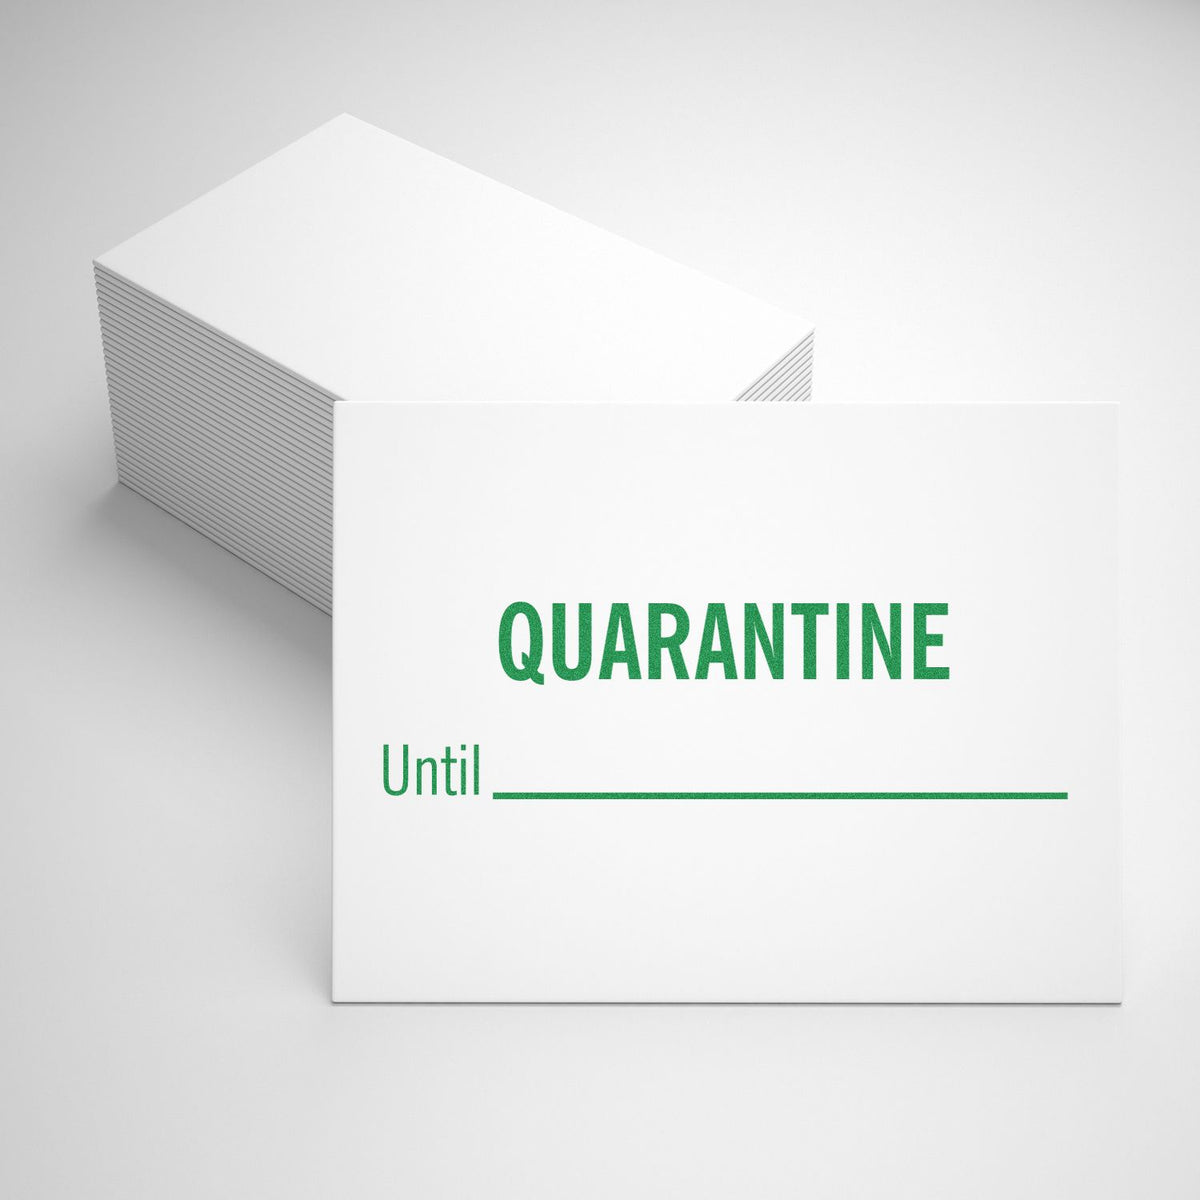 Quarantine Until Rubber Stamp In Use